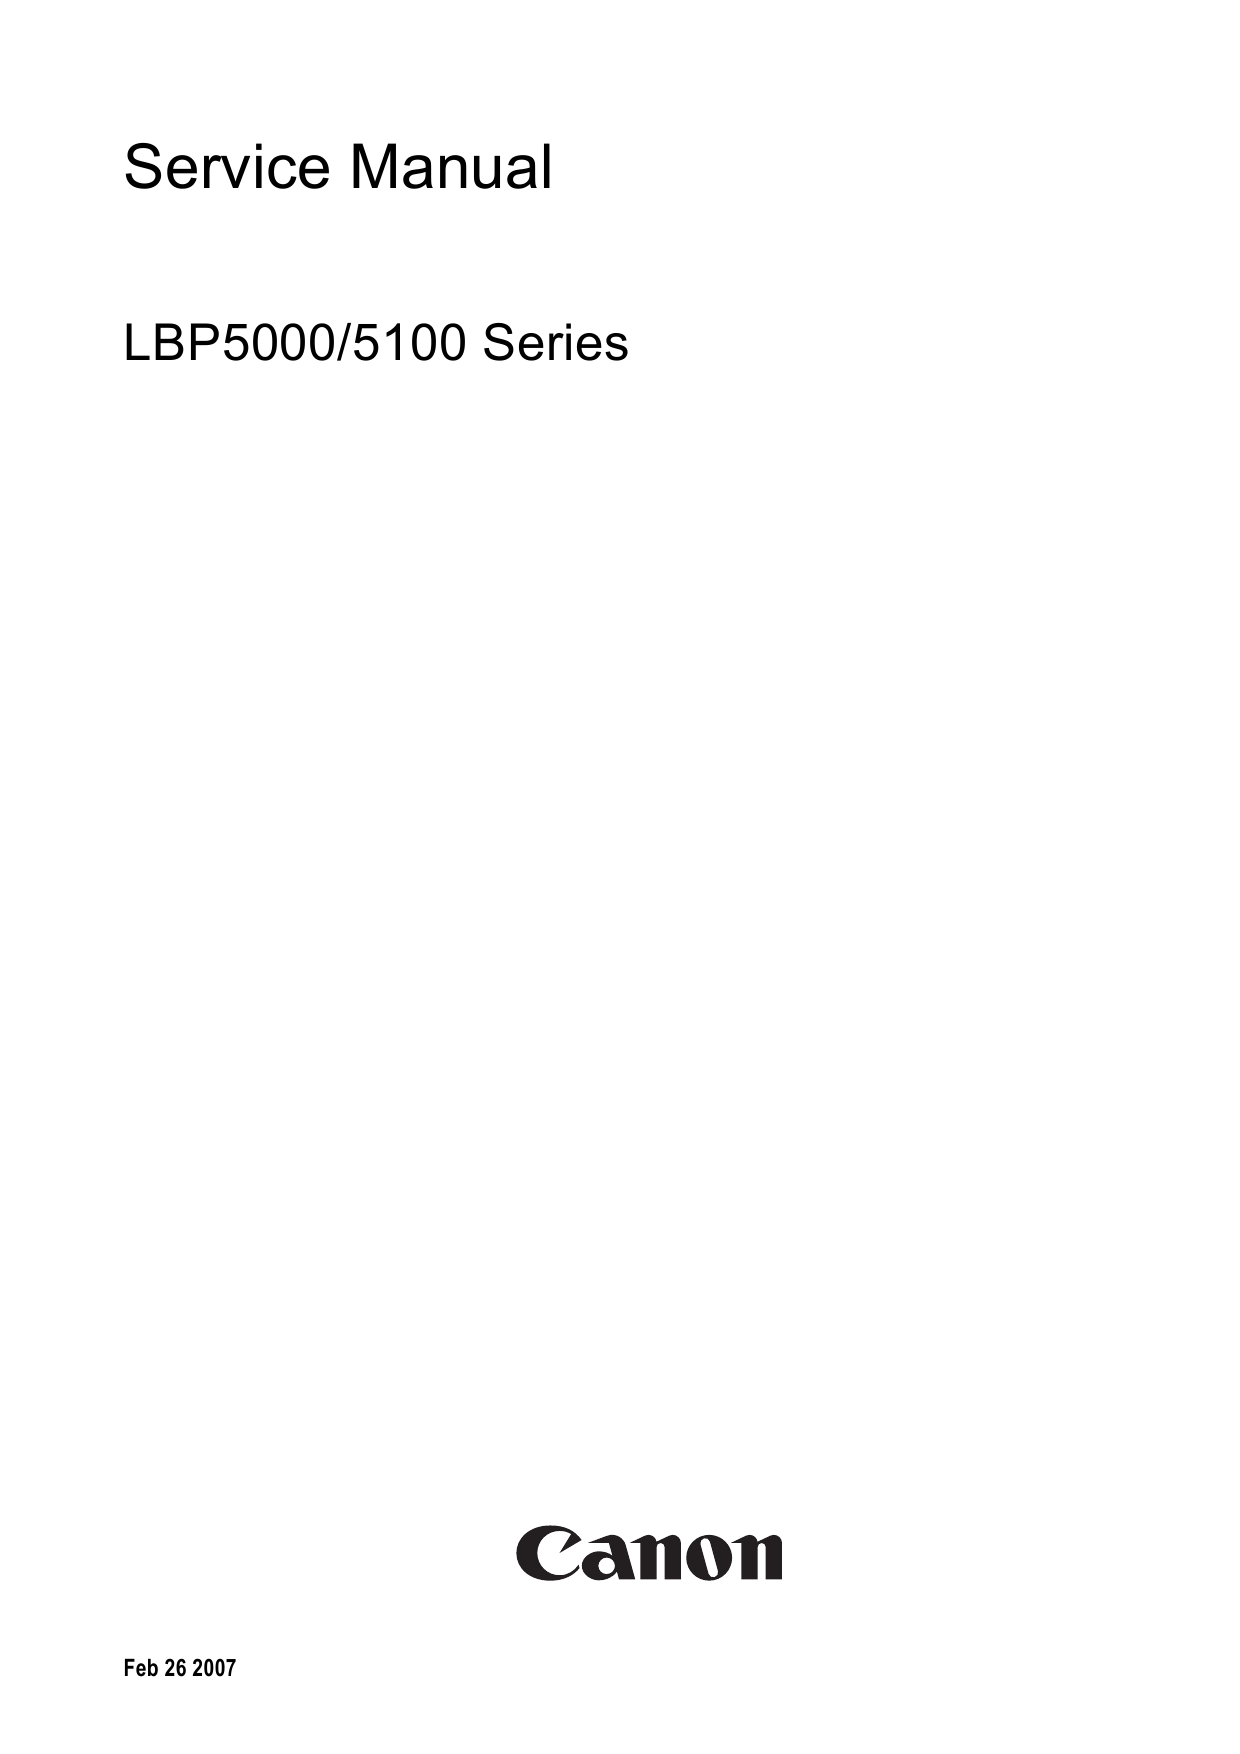 Canon imageCLASS LBP-5000 5100 Service Manual-1